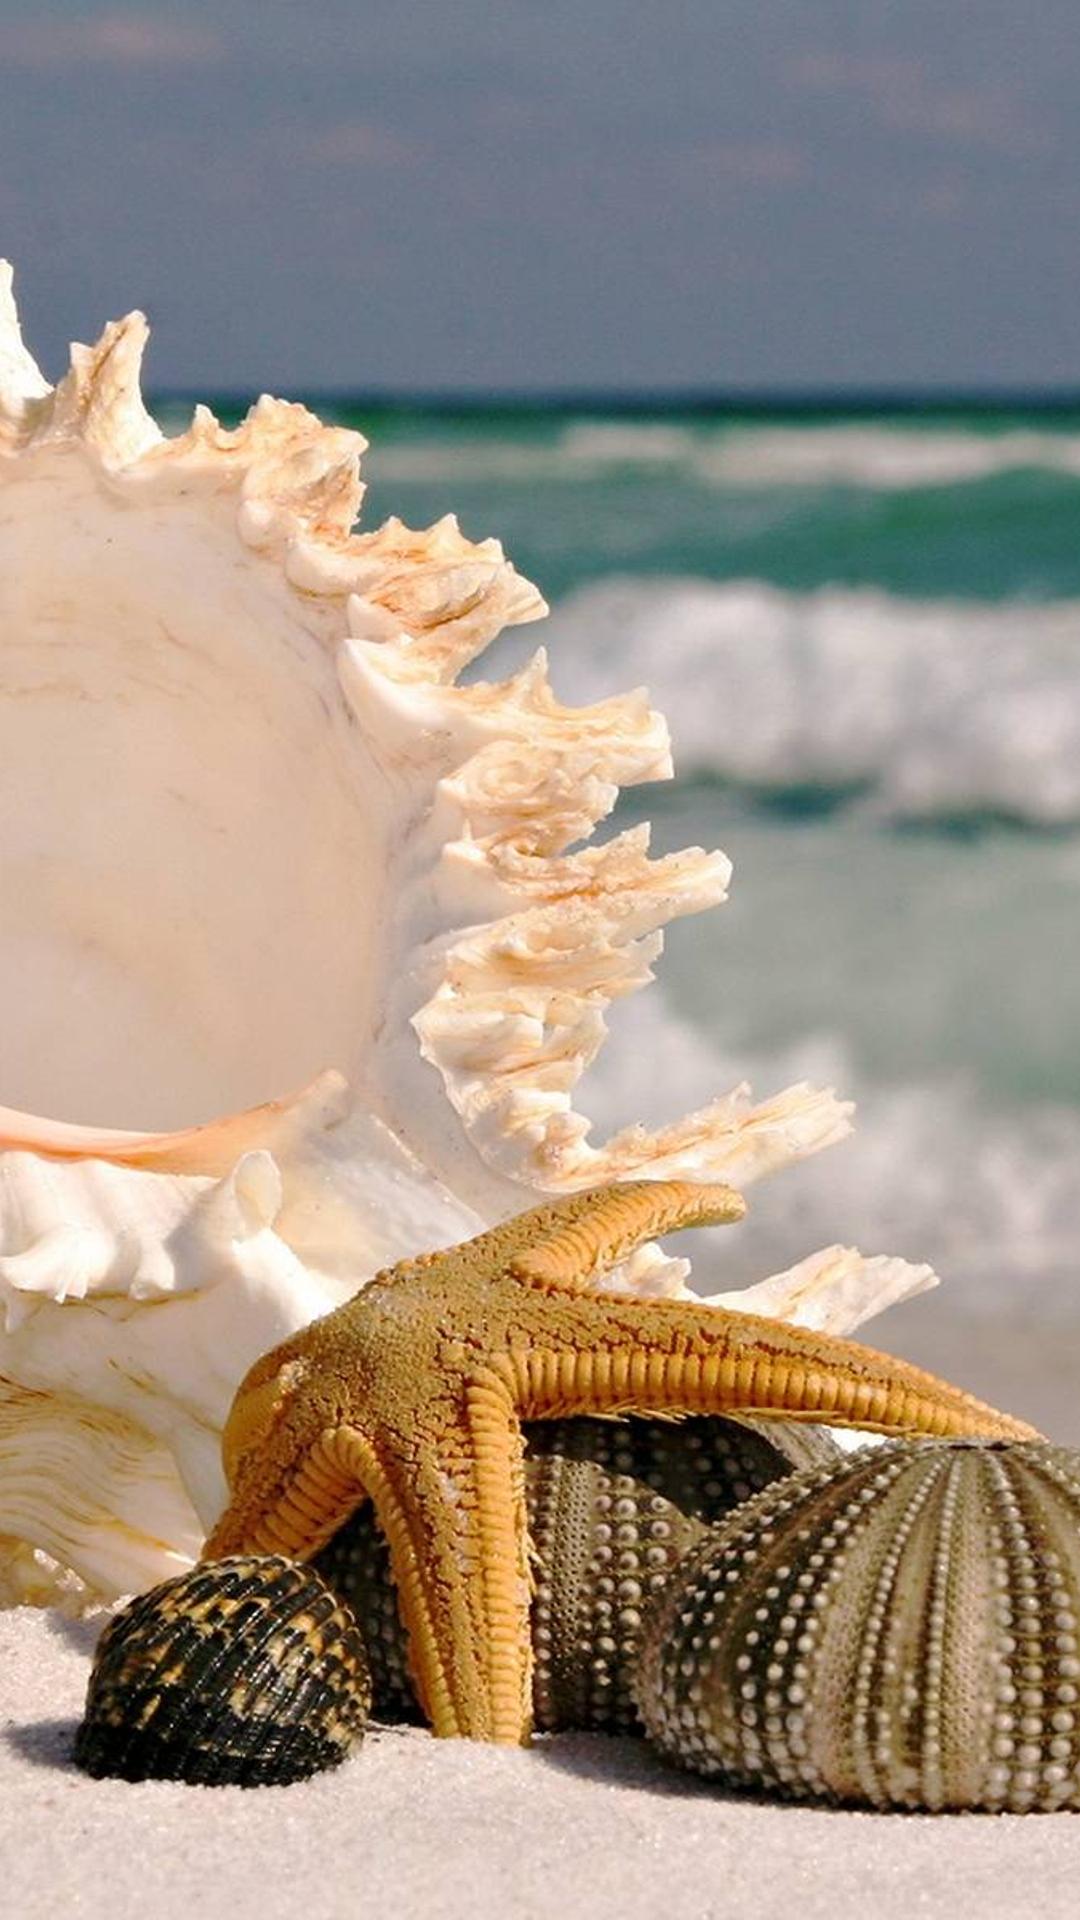 IPhone wallpaper with a seashell, starfish and sea urchin on the beach - Starfish